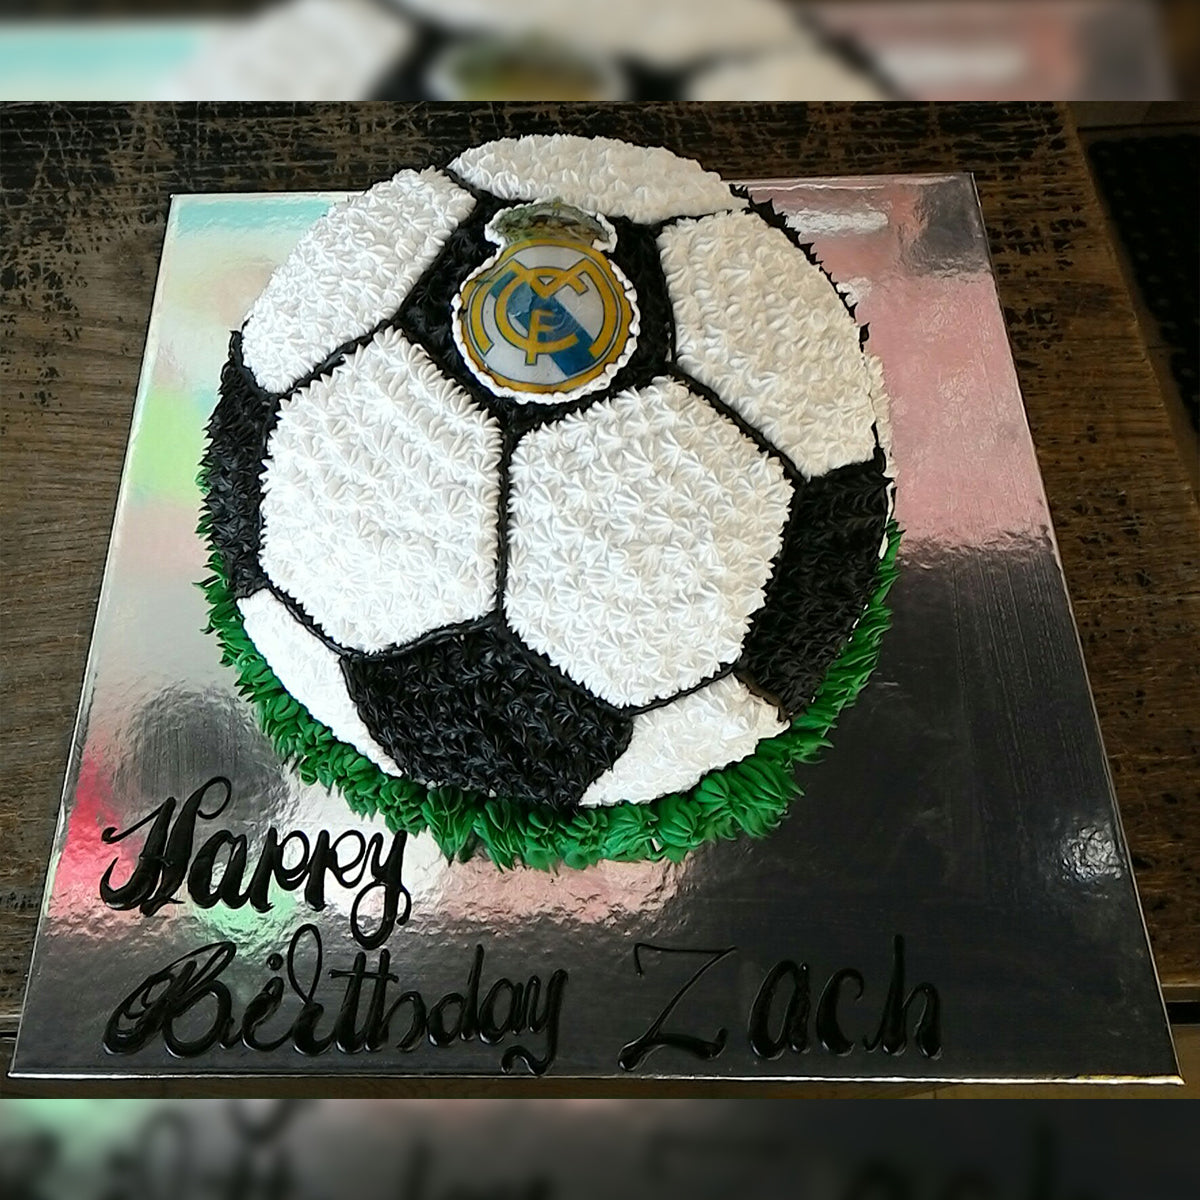 Real Madrid Football Cake – Honeypeachsg Bakery